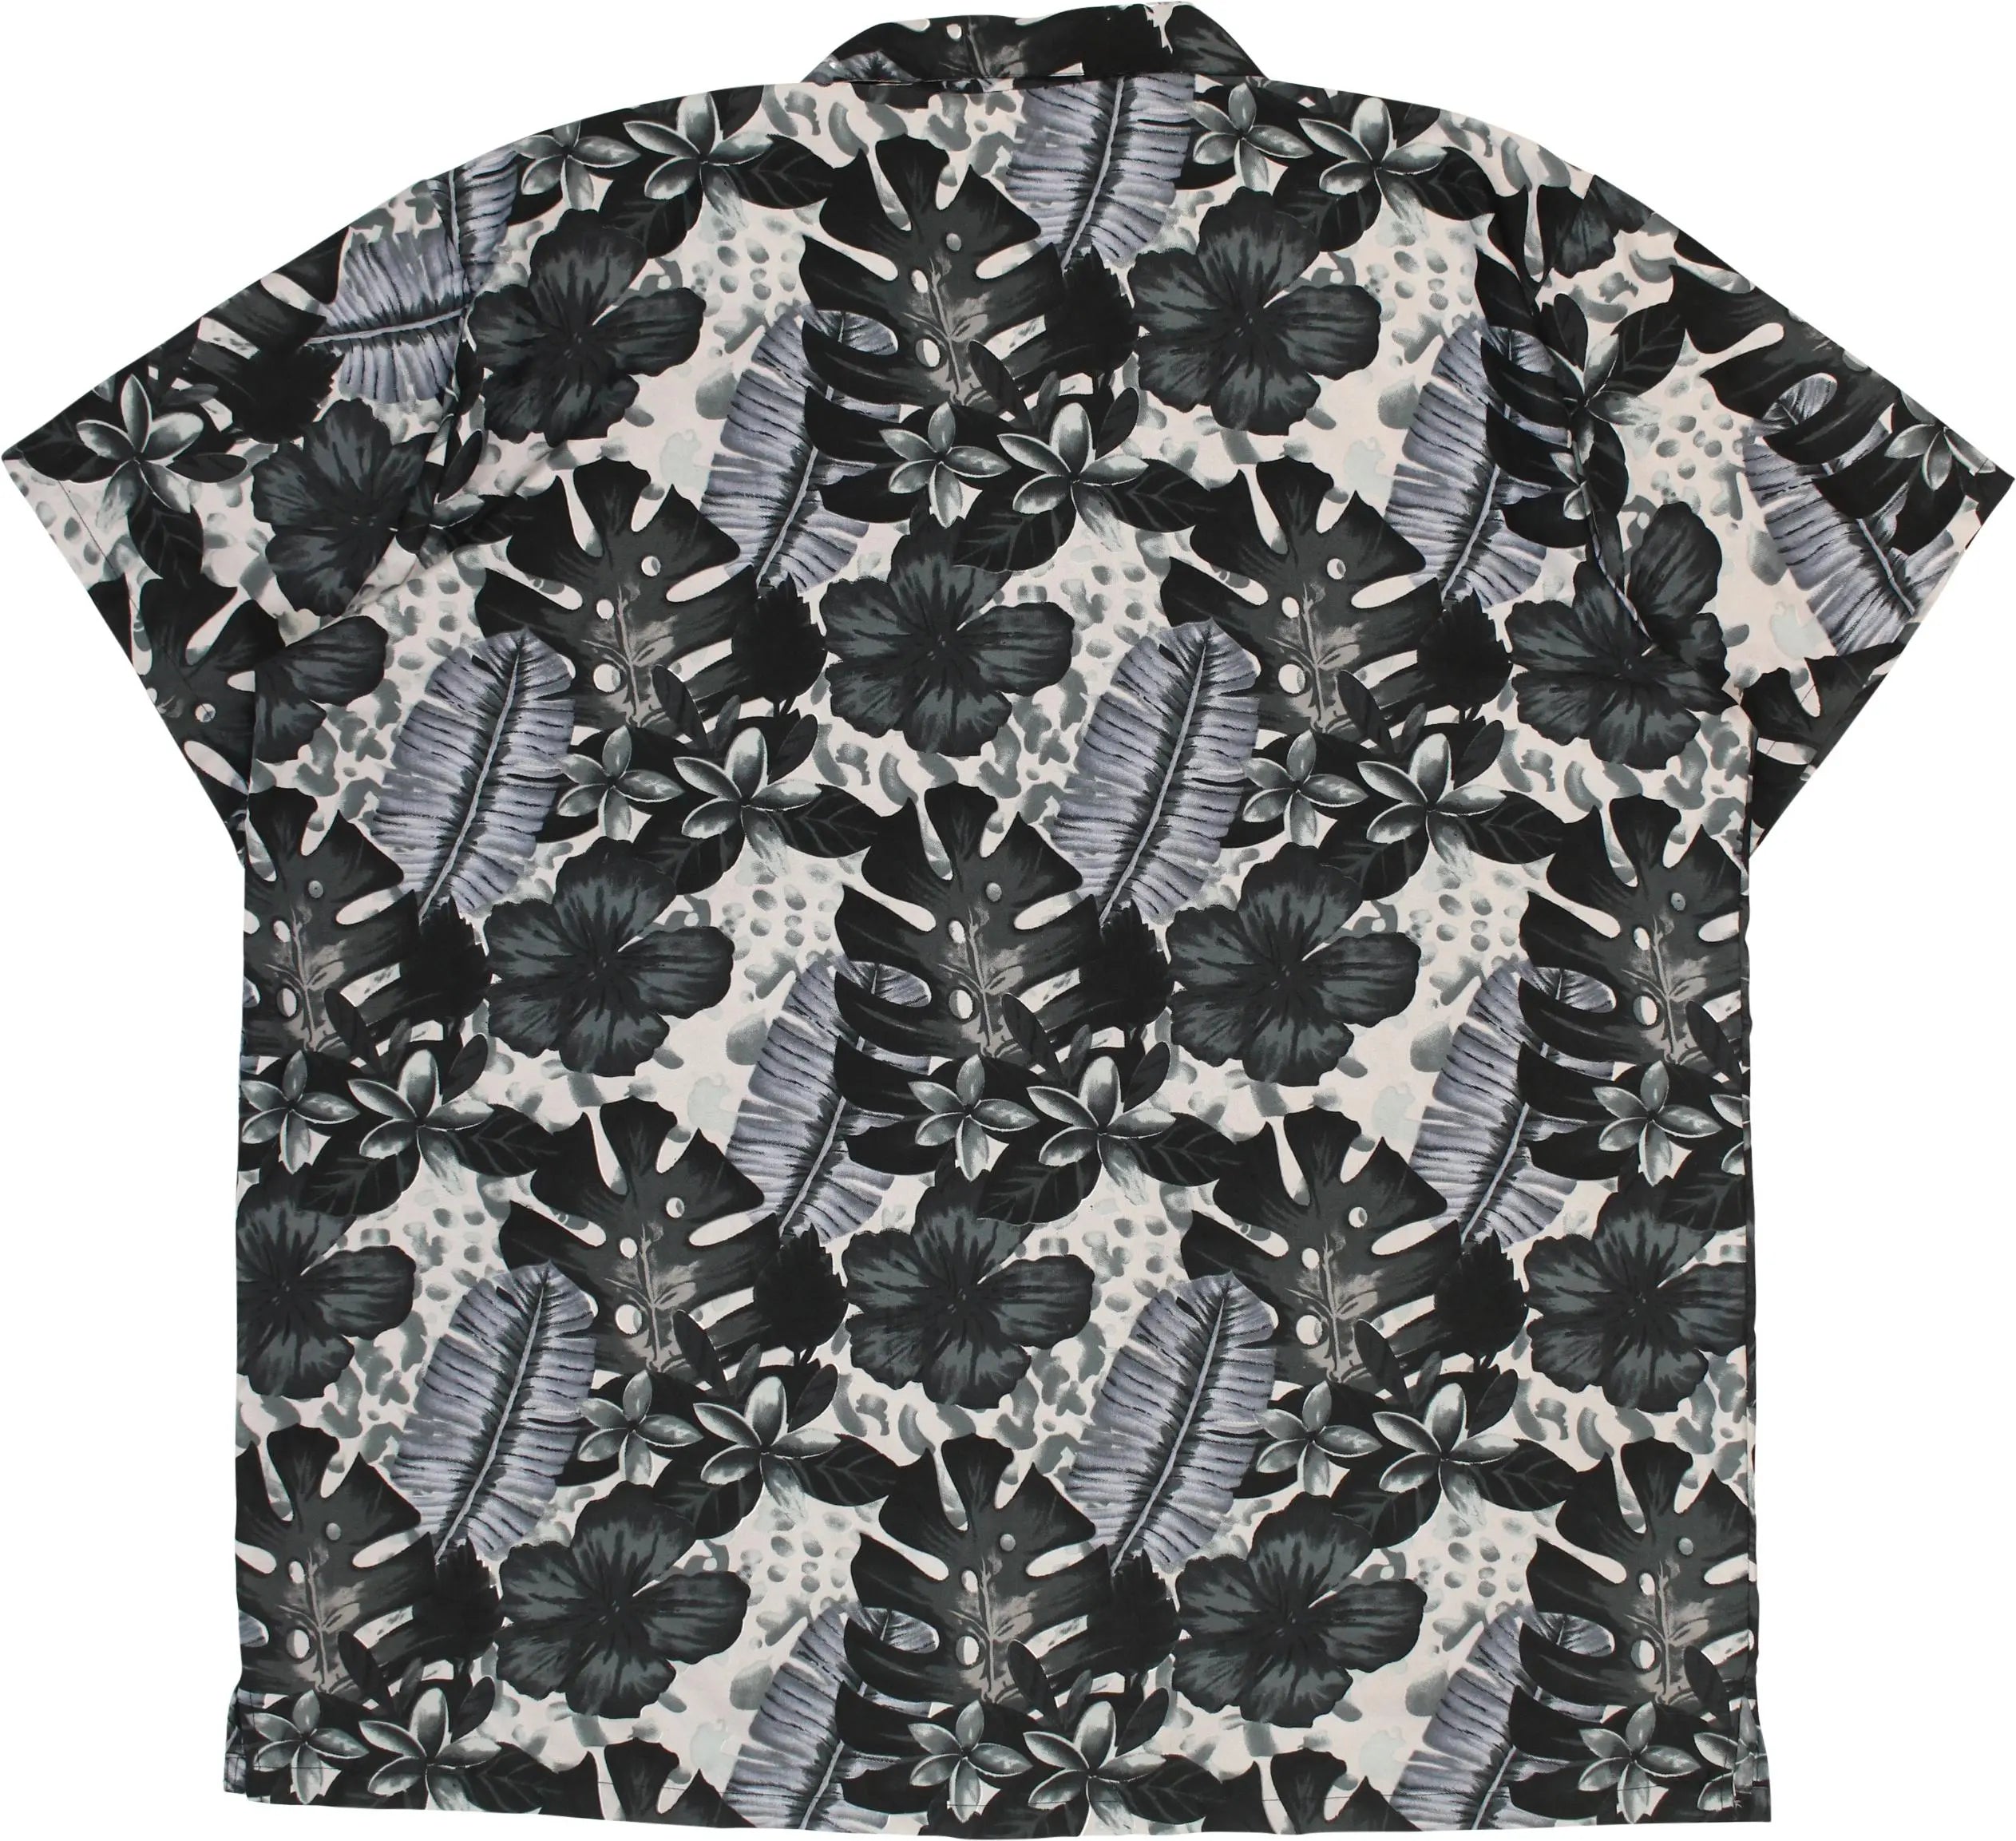 King Kameha - Hawaiian Shirt- ThriftTale.com - Vintage and second handclothing